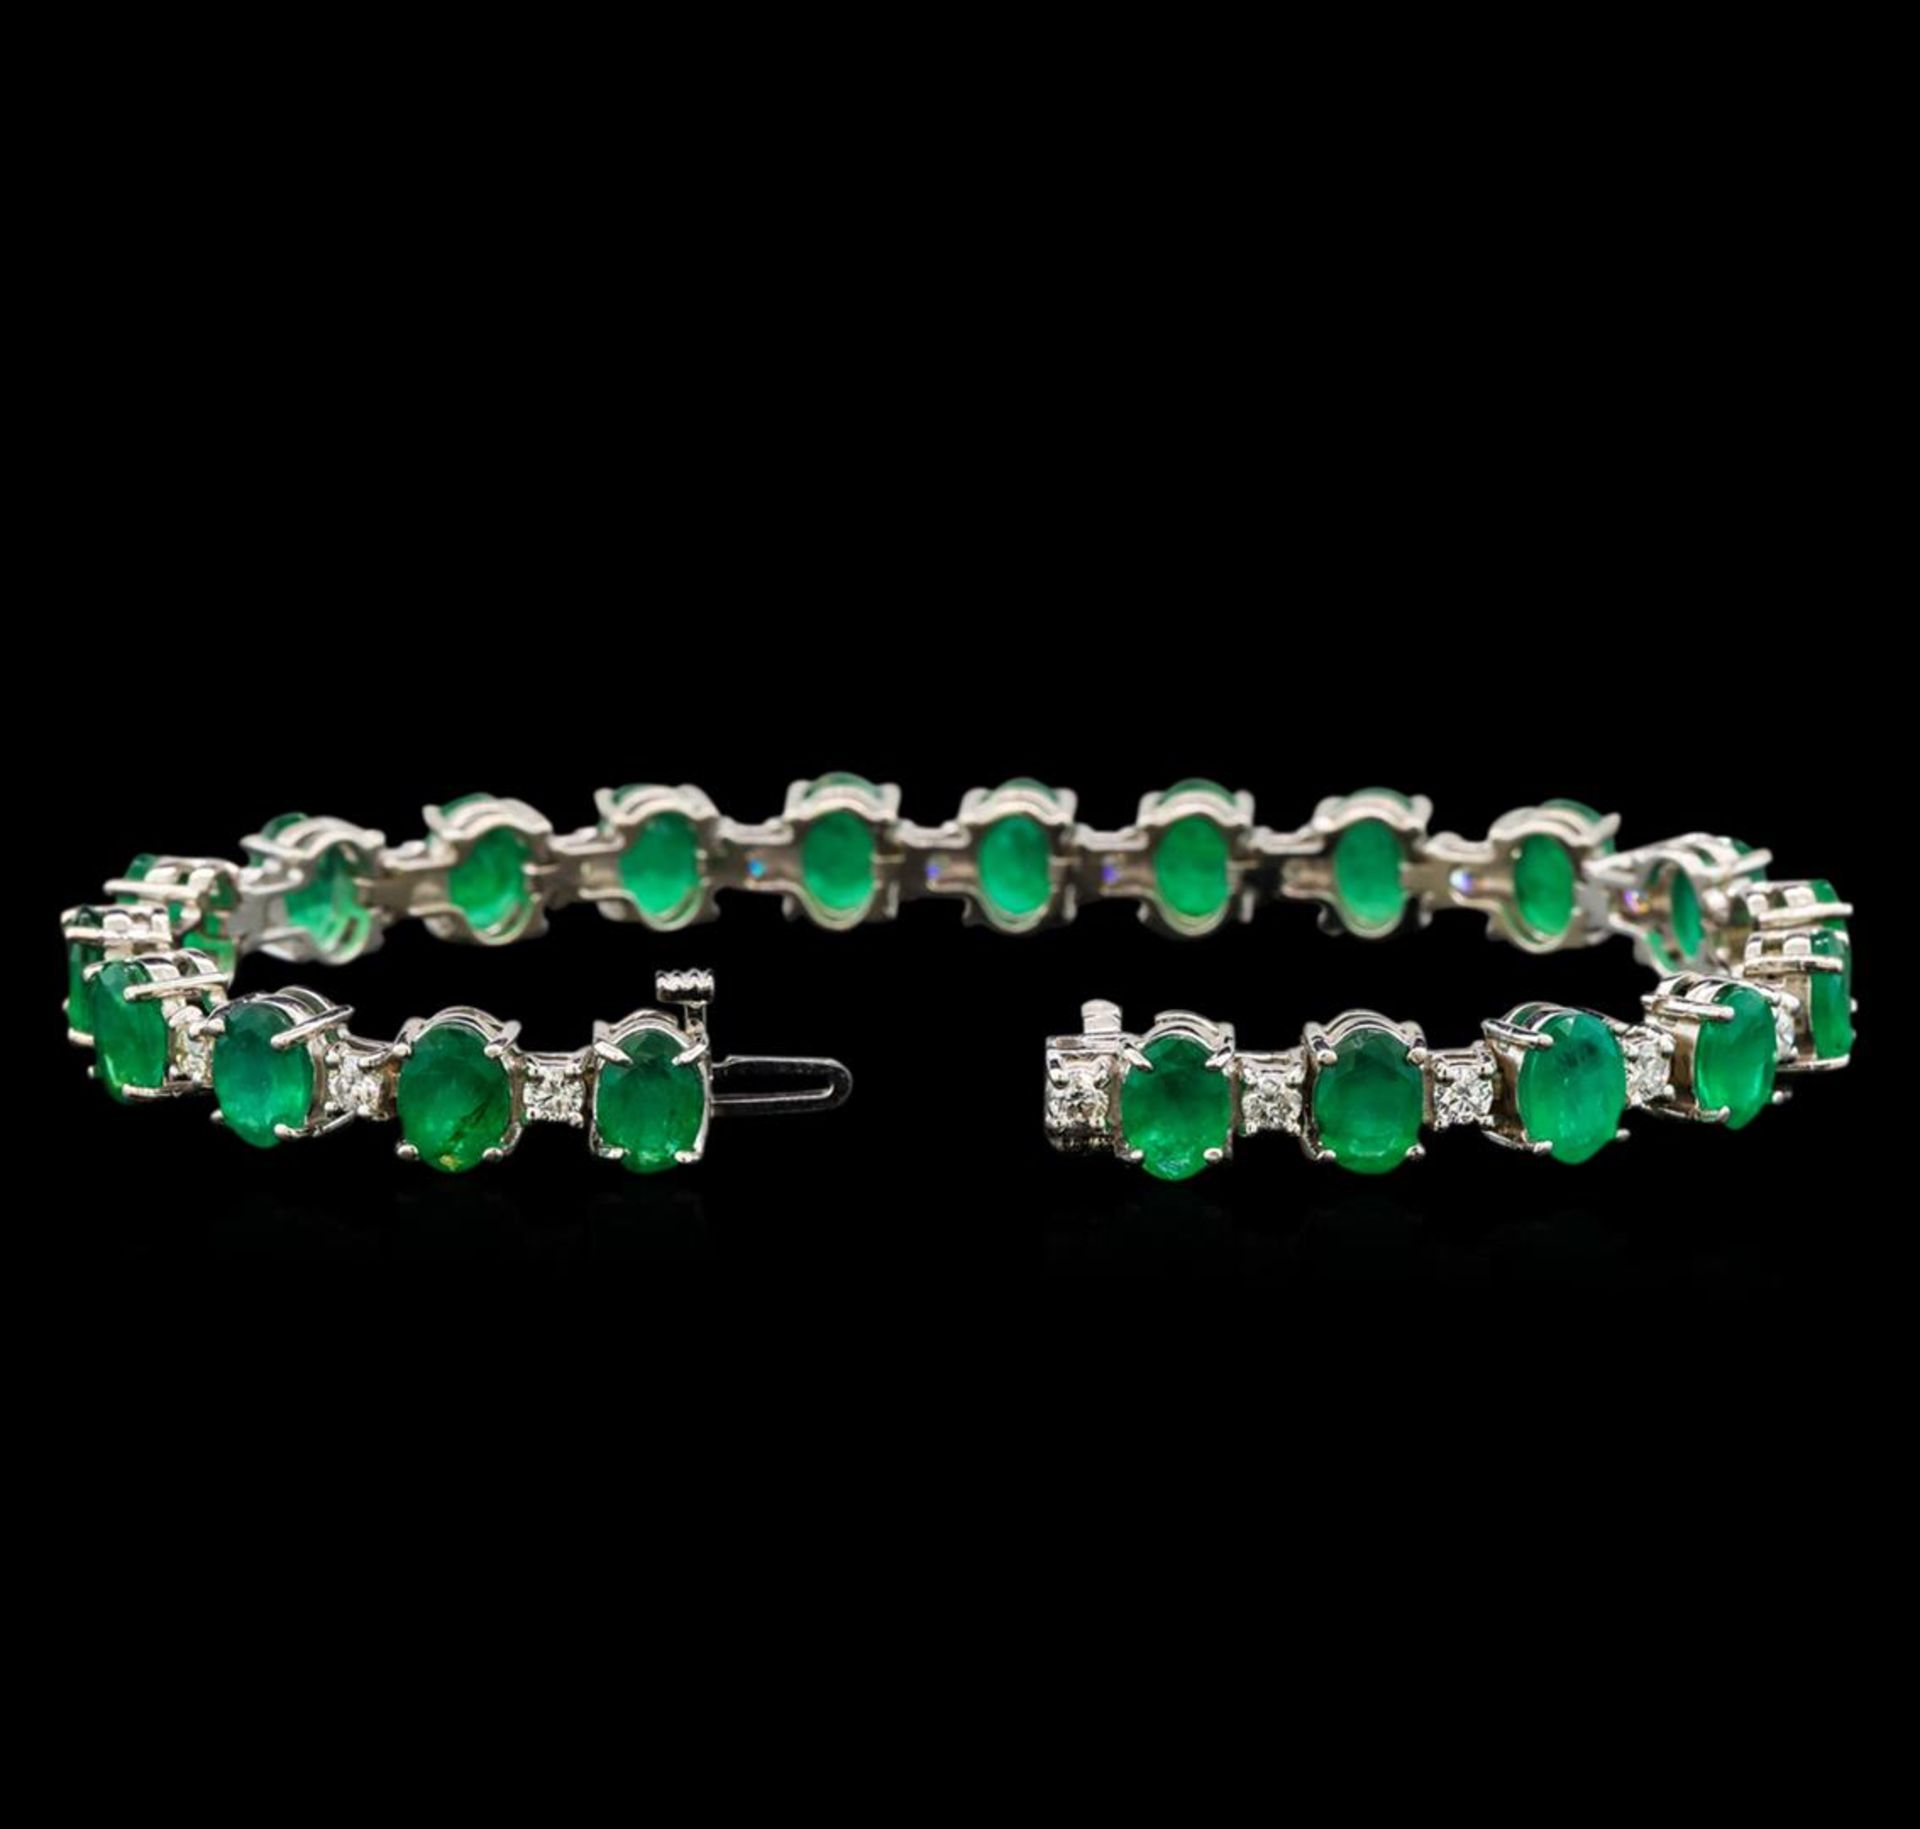 14KT White Gold 15.83 ctw Emerald and Diamond Bracelet - Image 3 of 4